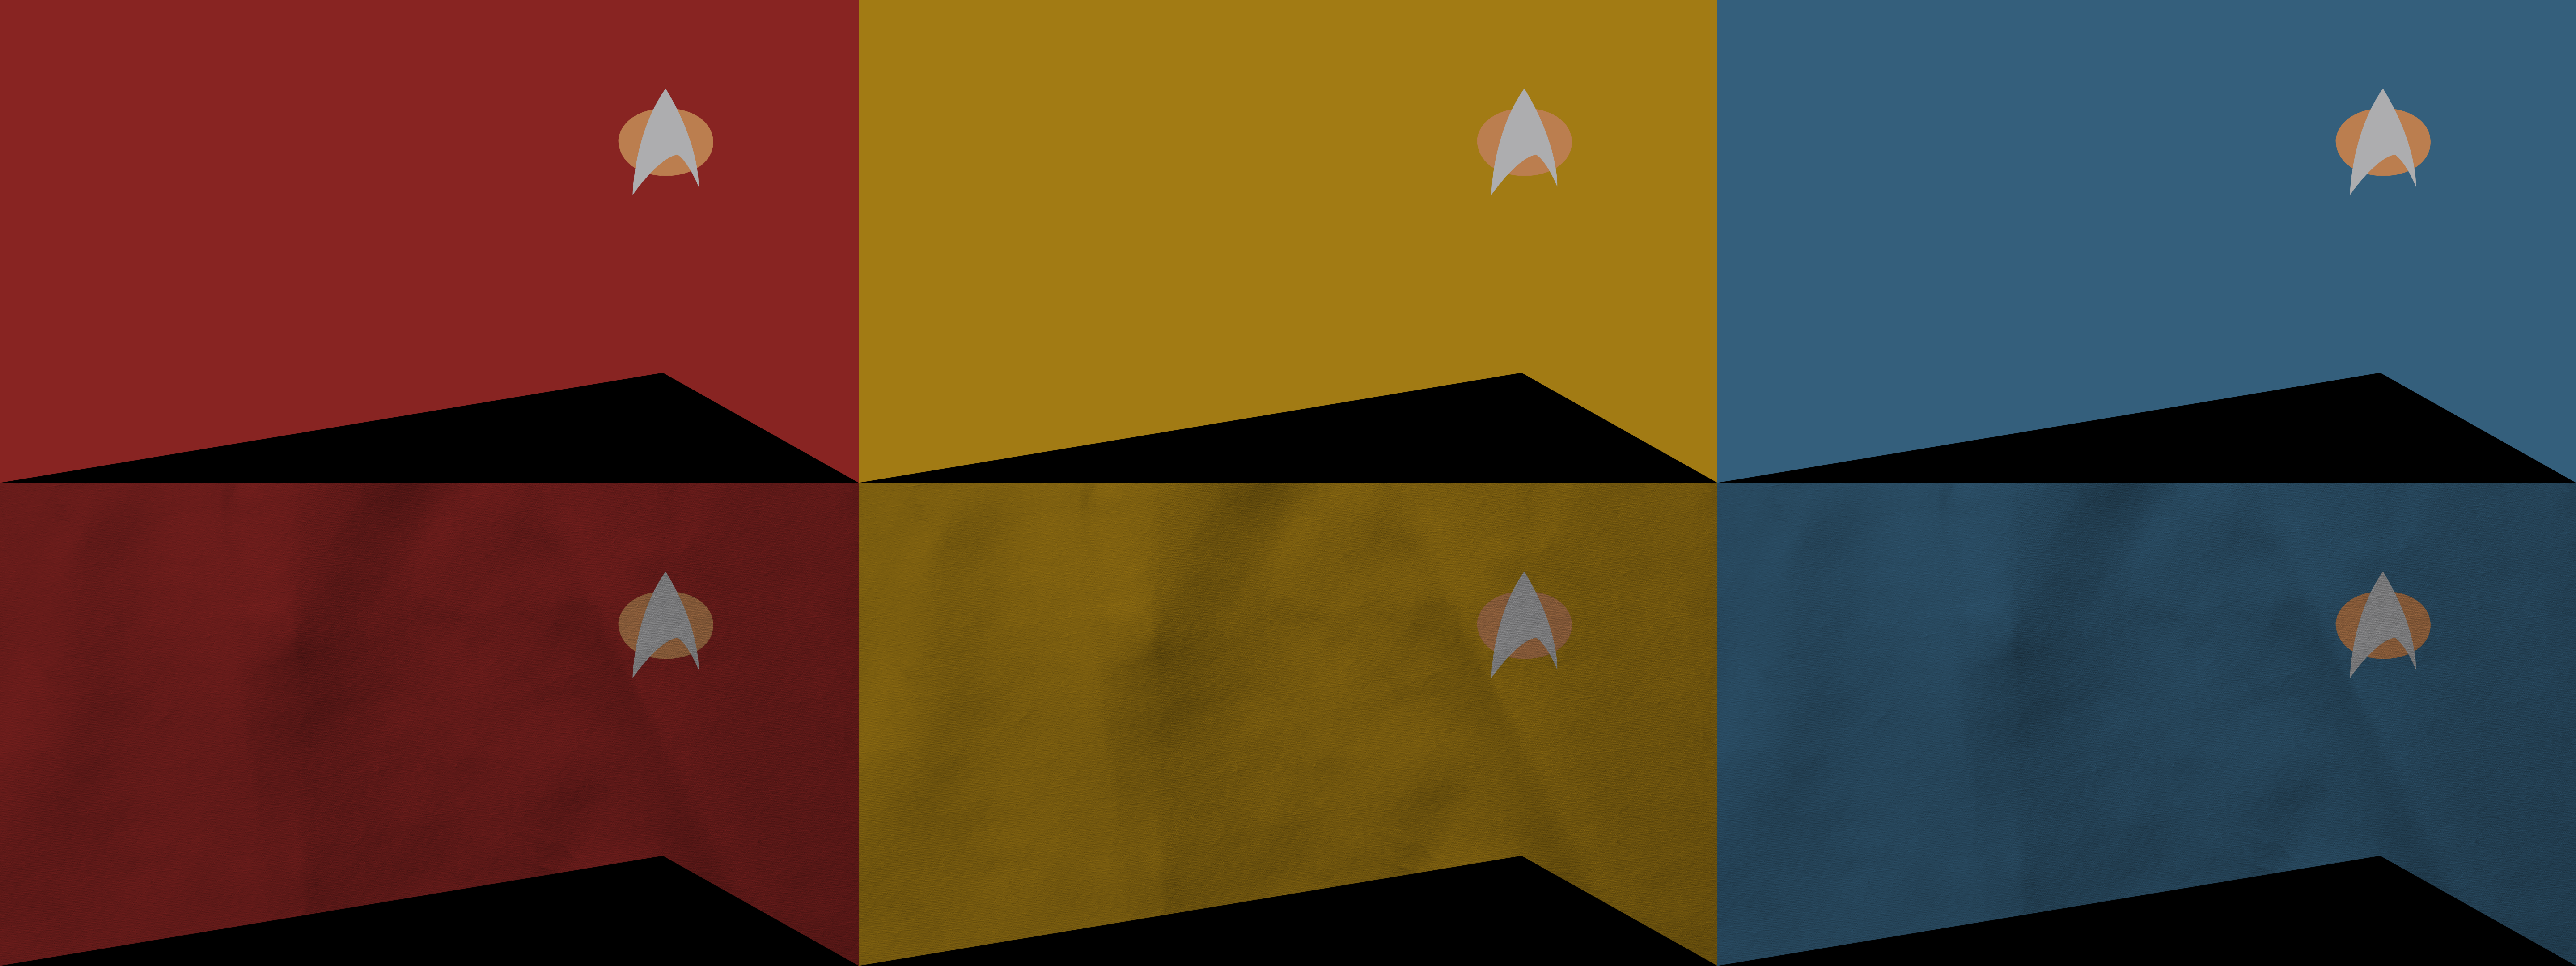 V1 Star Trek Next Generation Wallpaper Pack By Cheetashock On